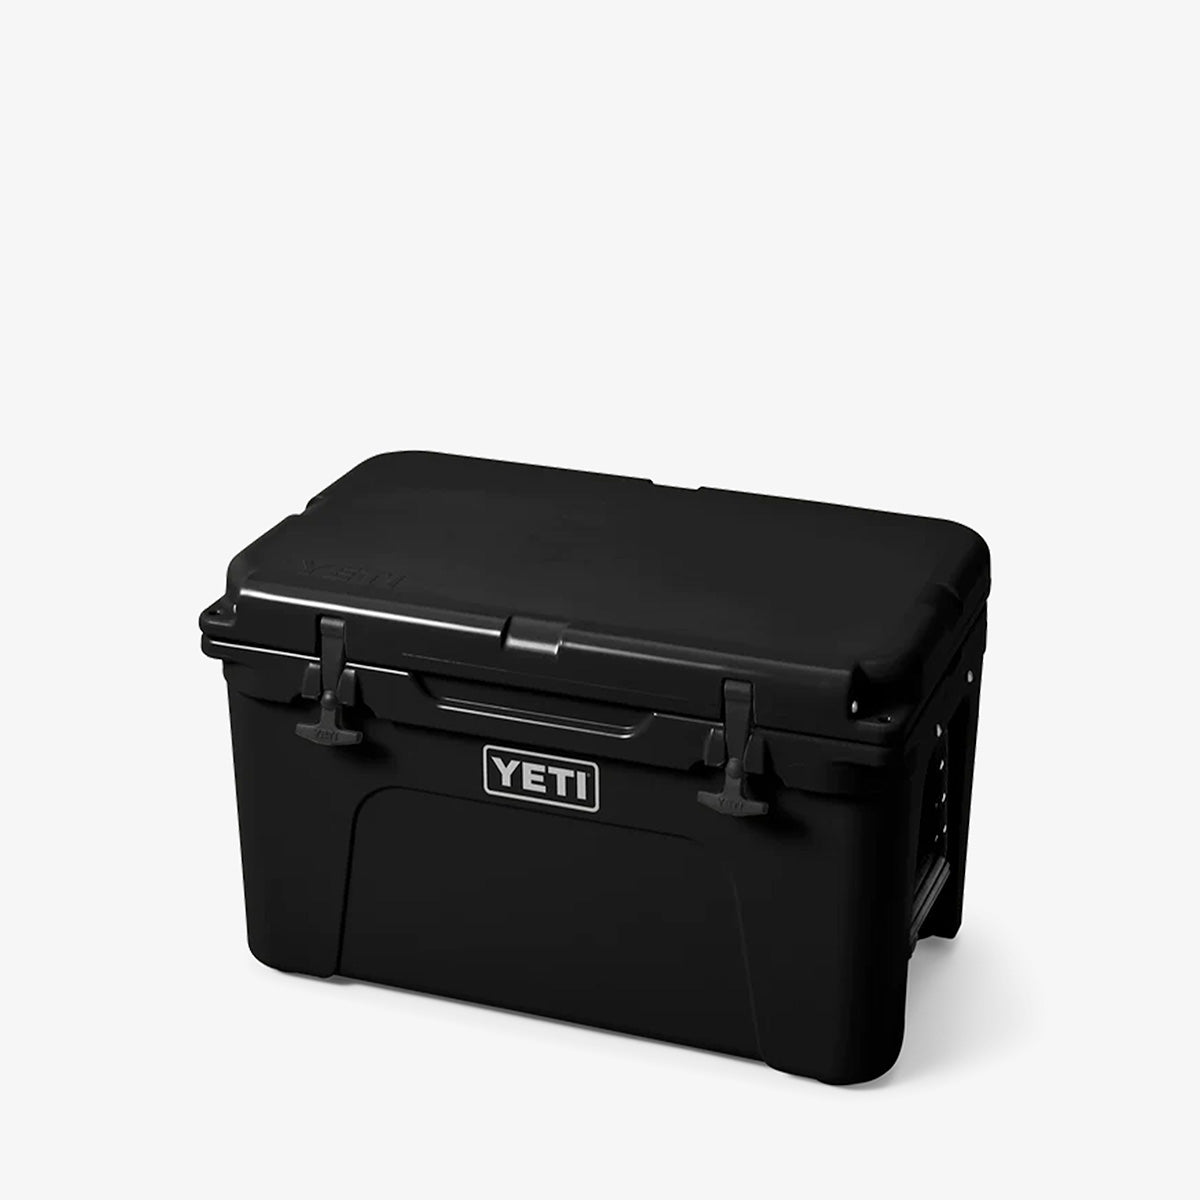 YETI Tundra 45 Cool Box - Black – Urban Industry